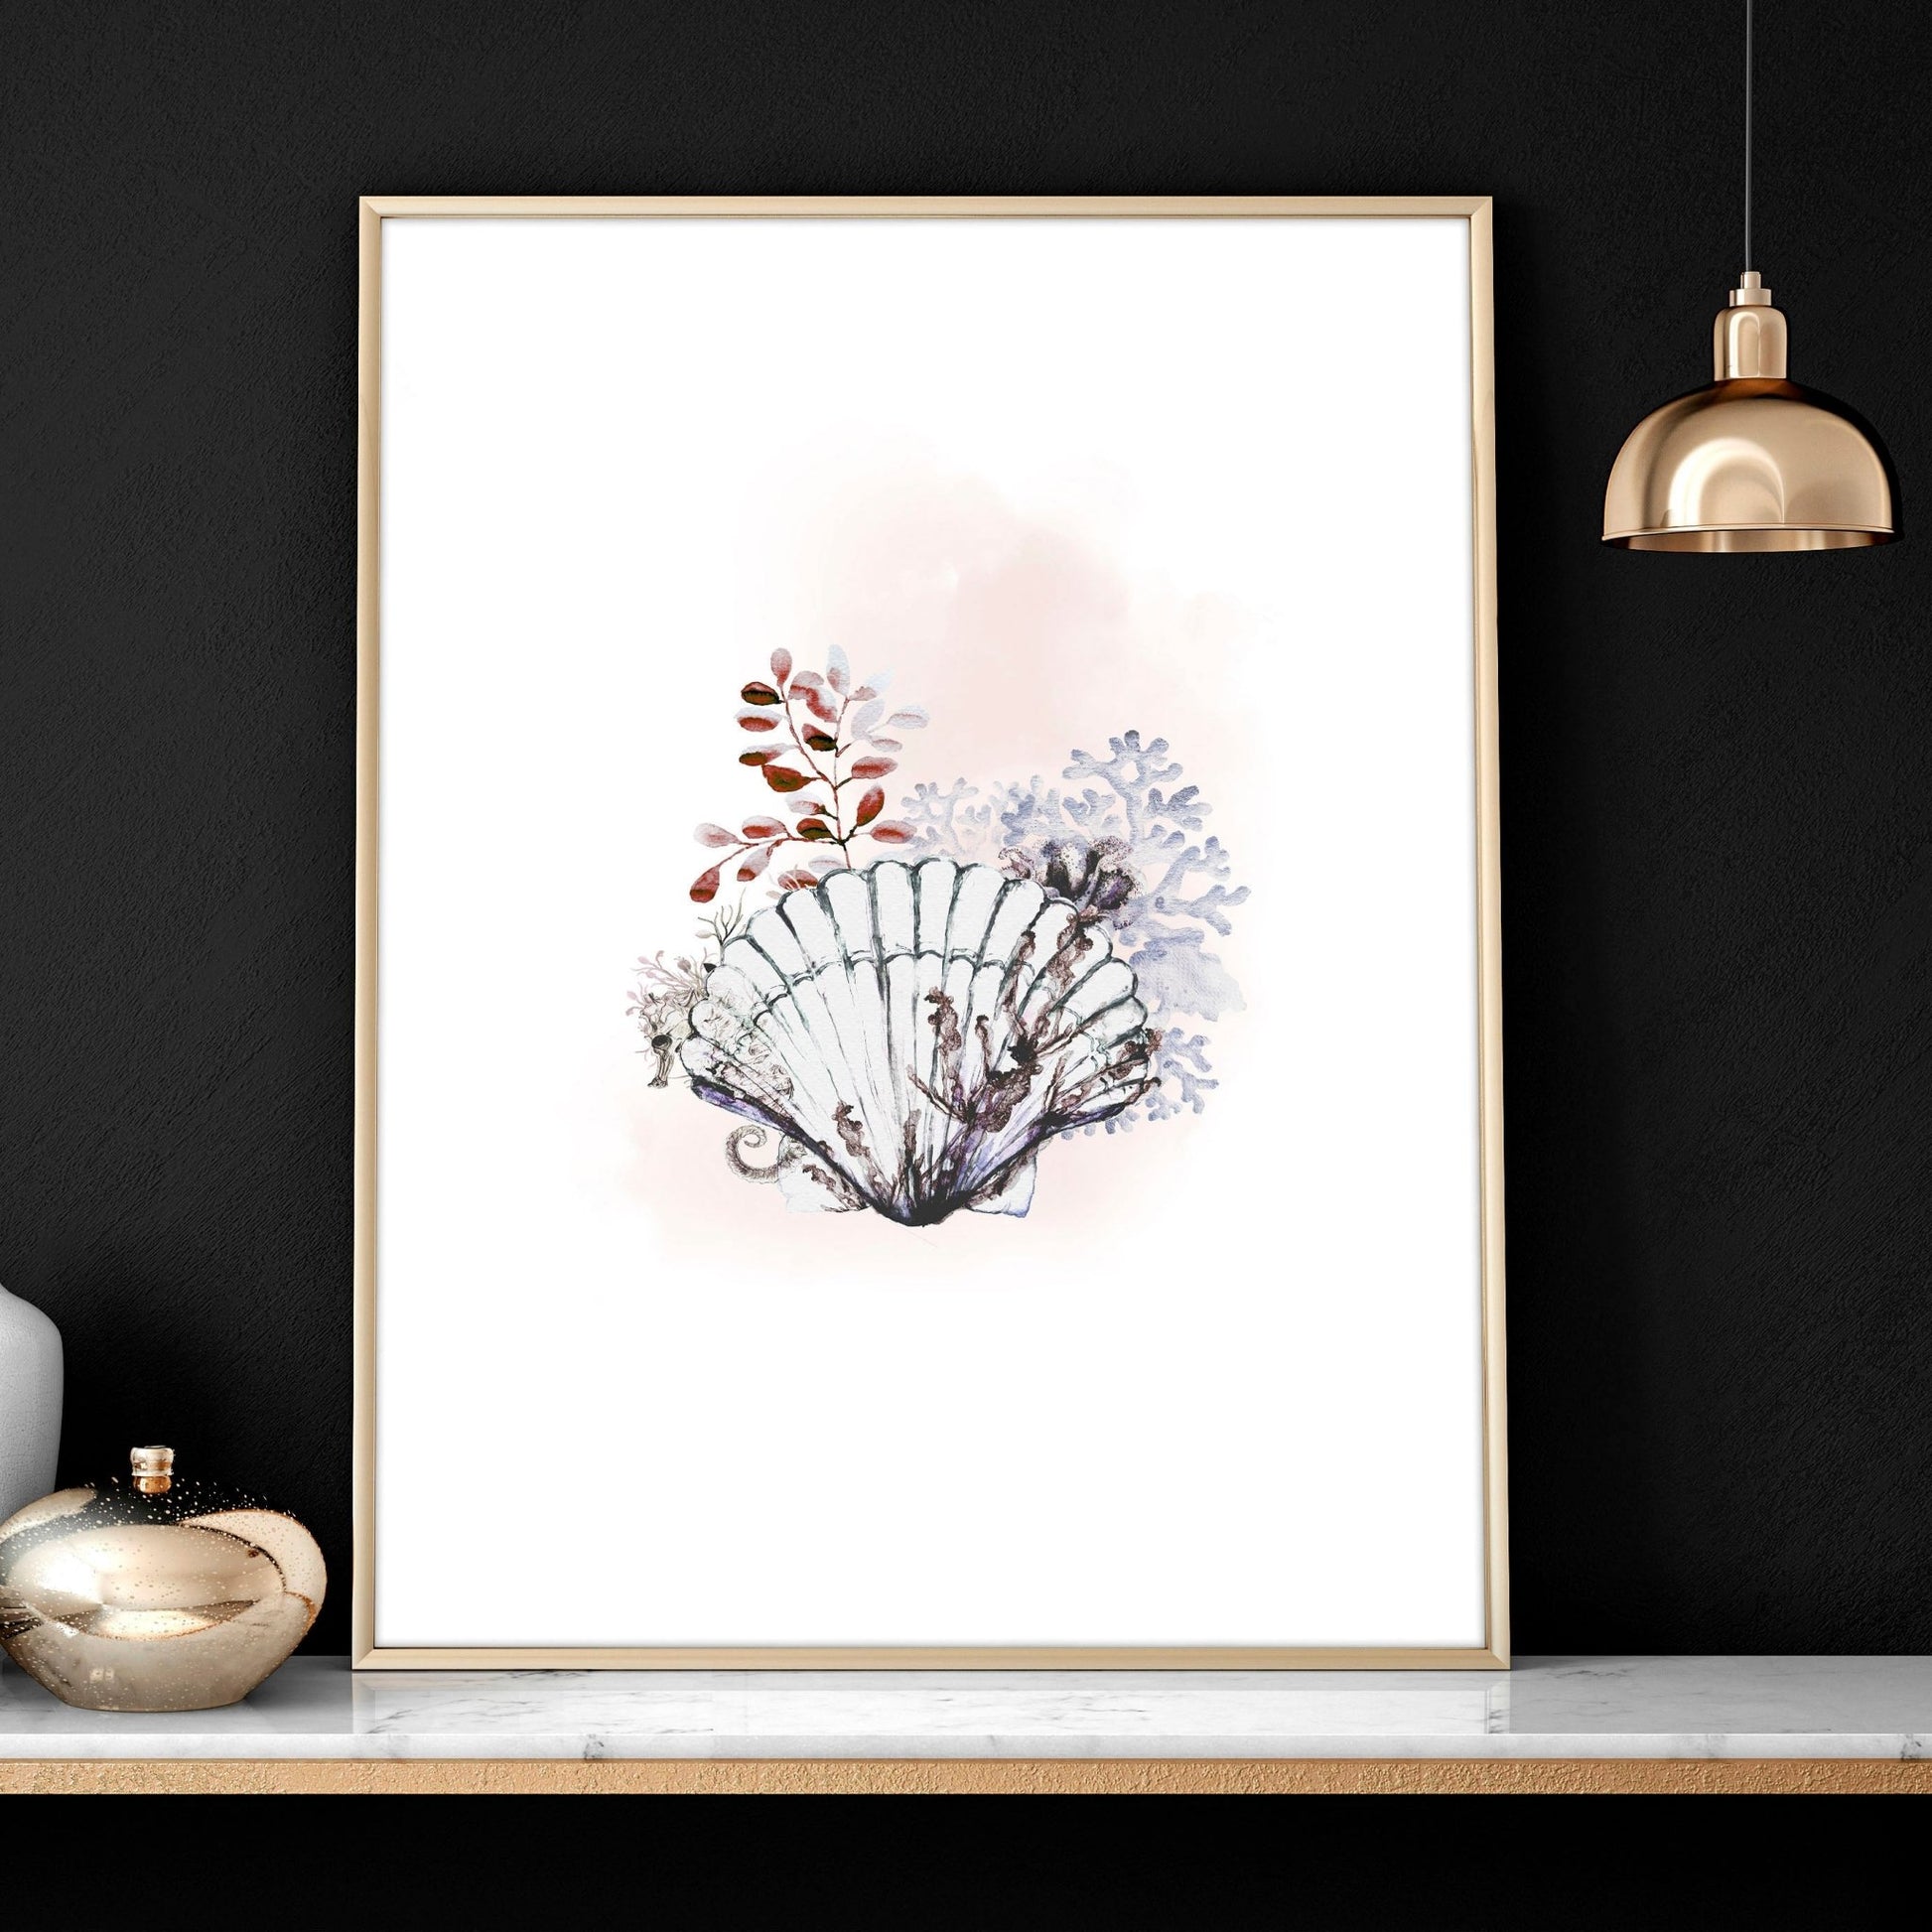 Office wall artwork | set of 3 Seashells wall art prints